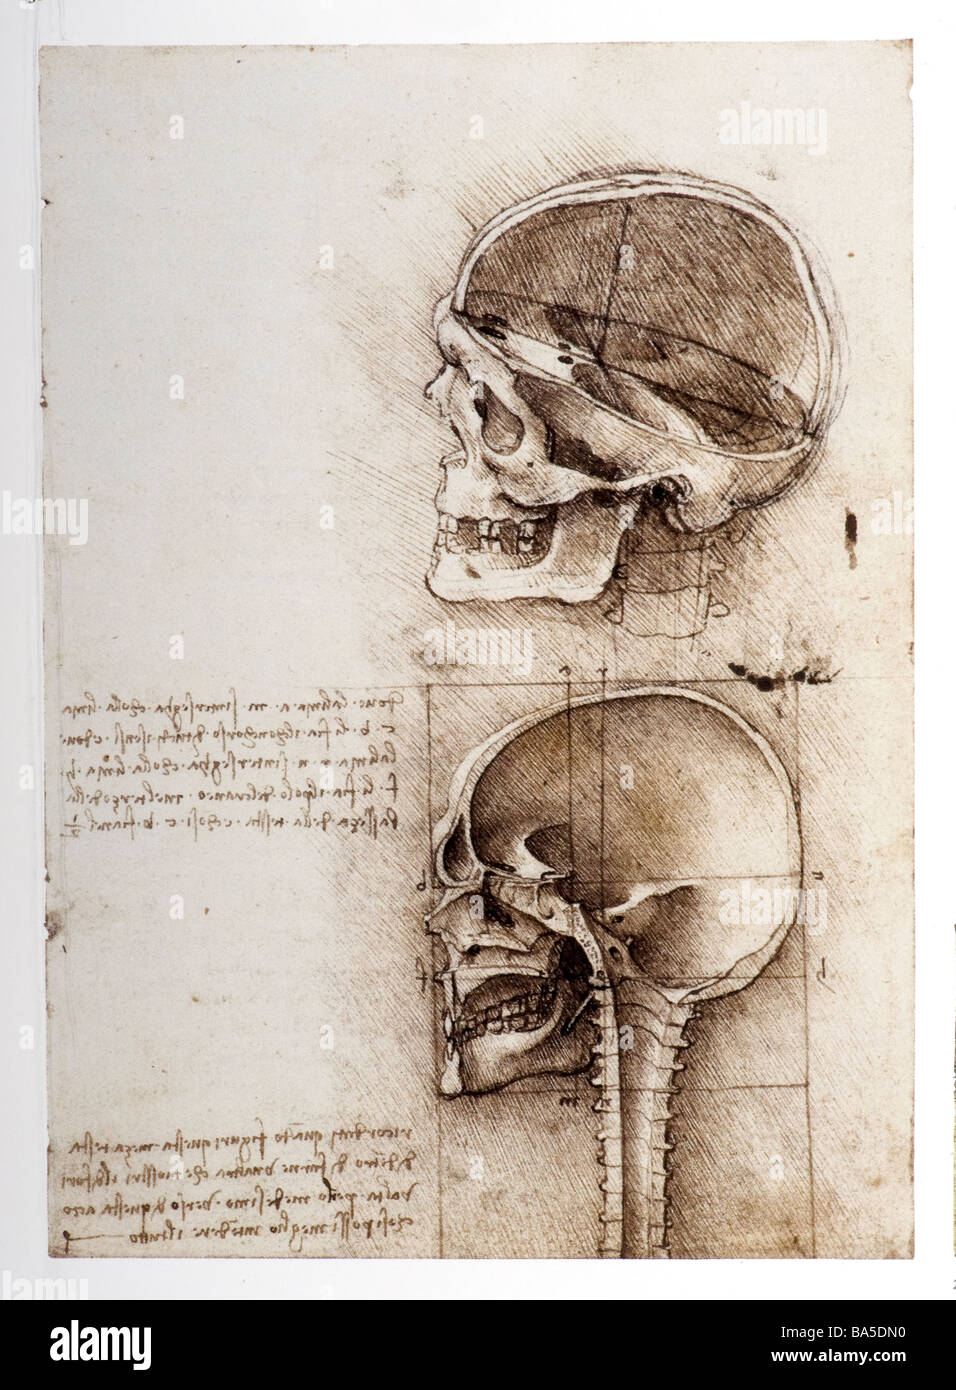 Anatomical studies of the human skull by Leonardo da Vinci Stock Photo